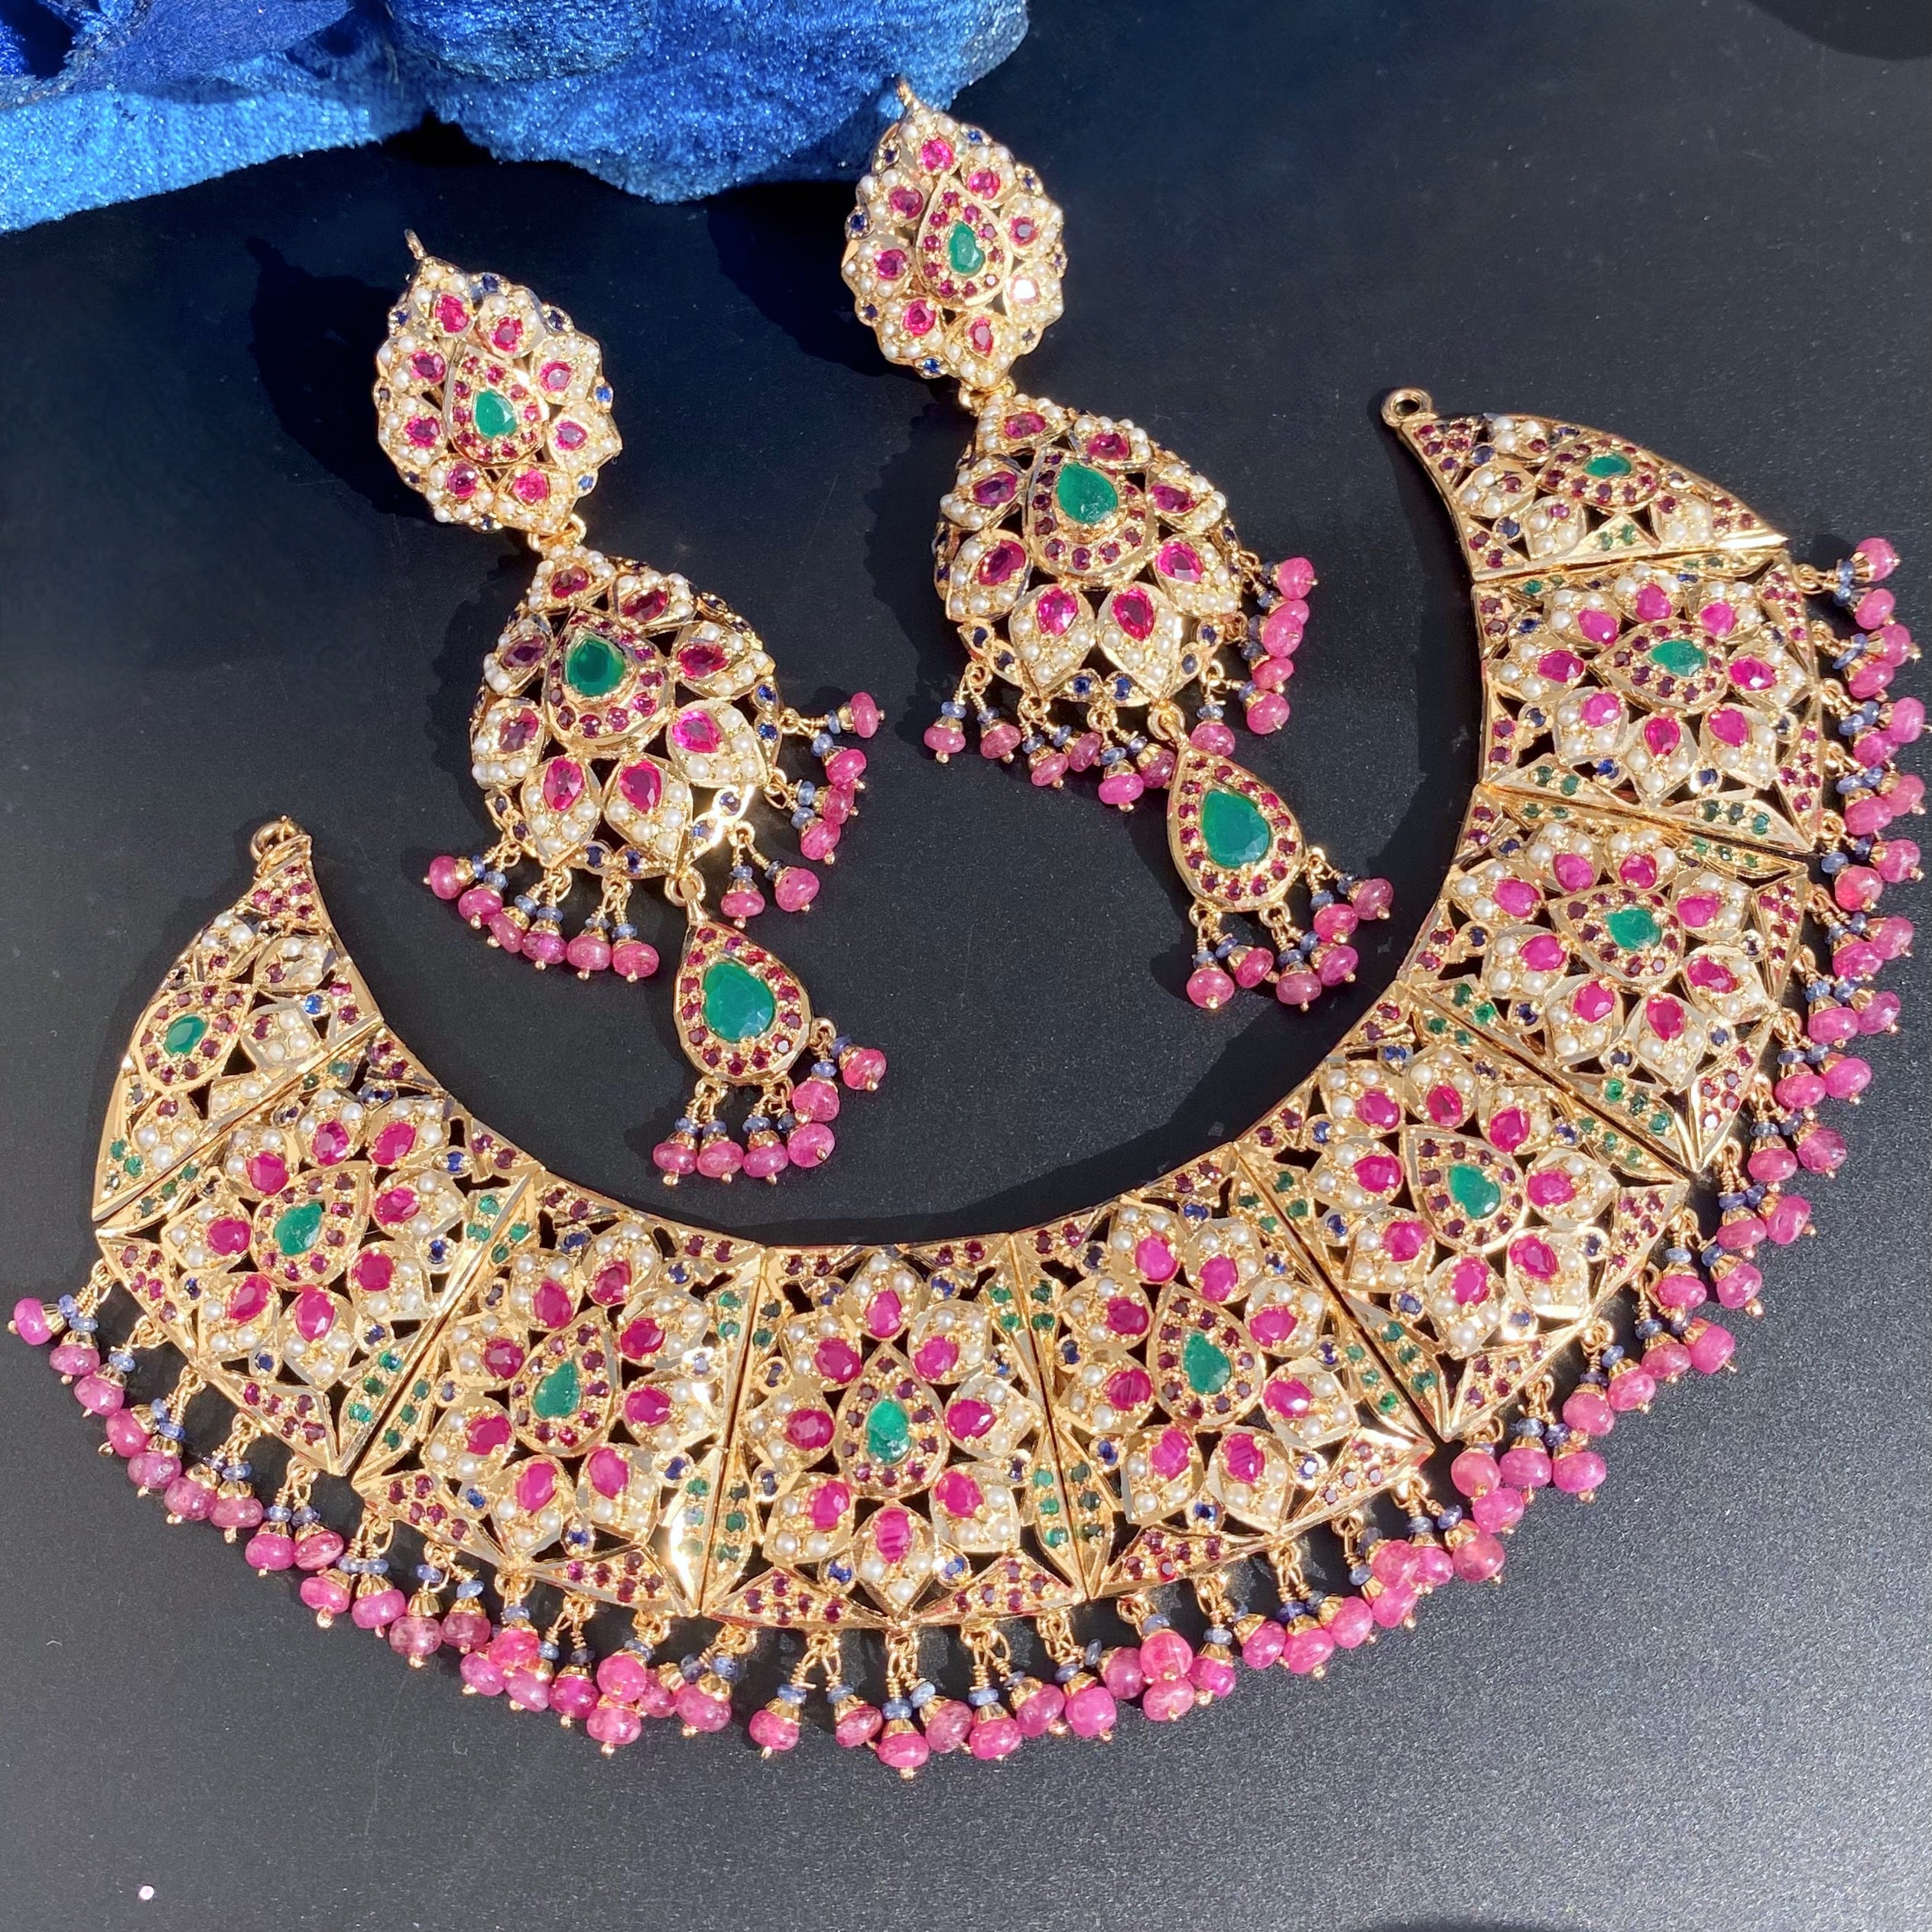 bridal necklace set